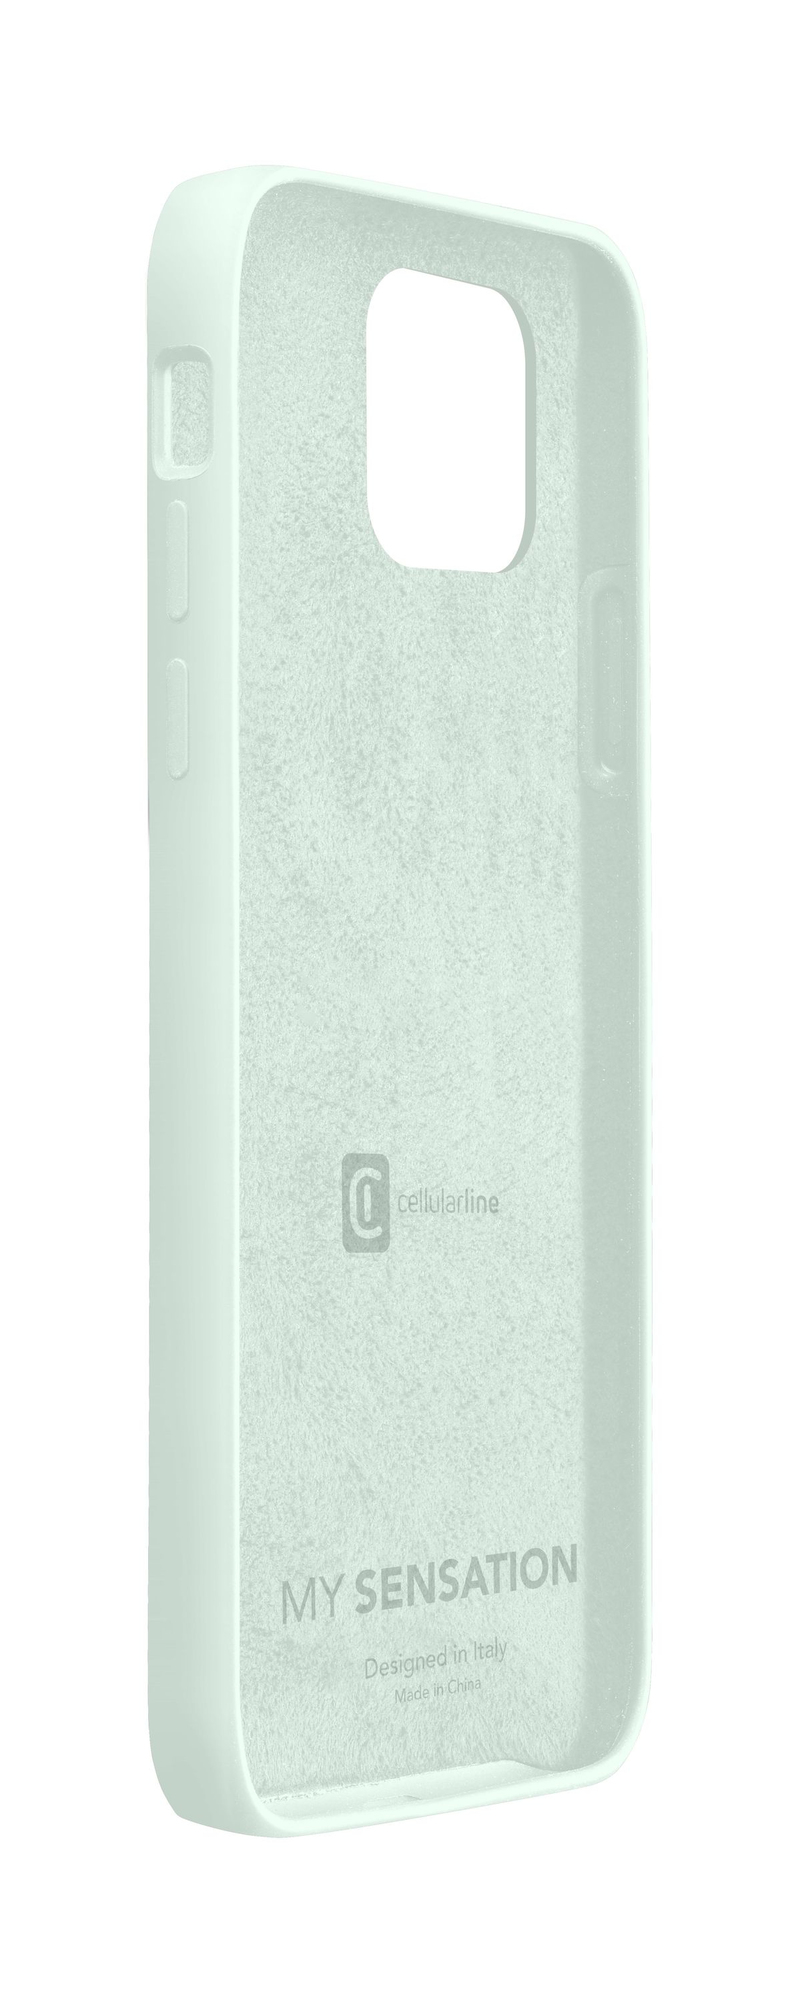 Cellularline Back Cover Sensation Green For iPhone 12 Mini